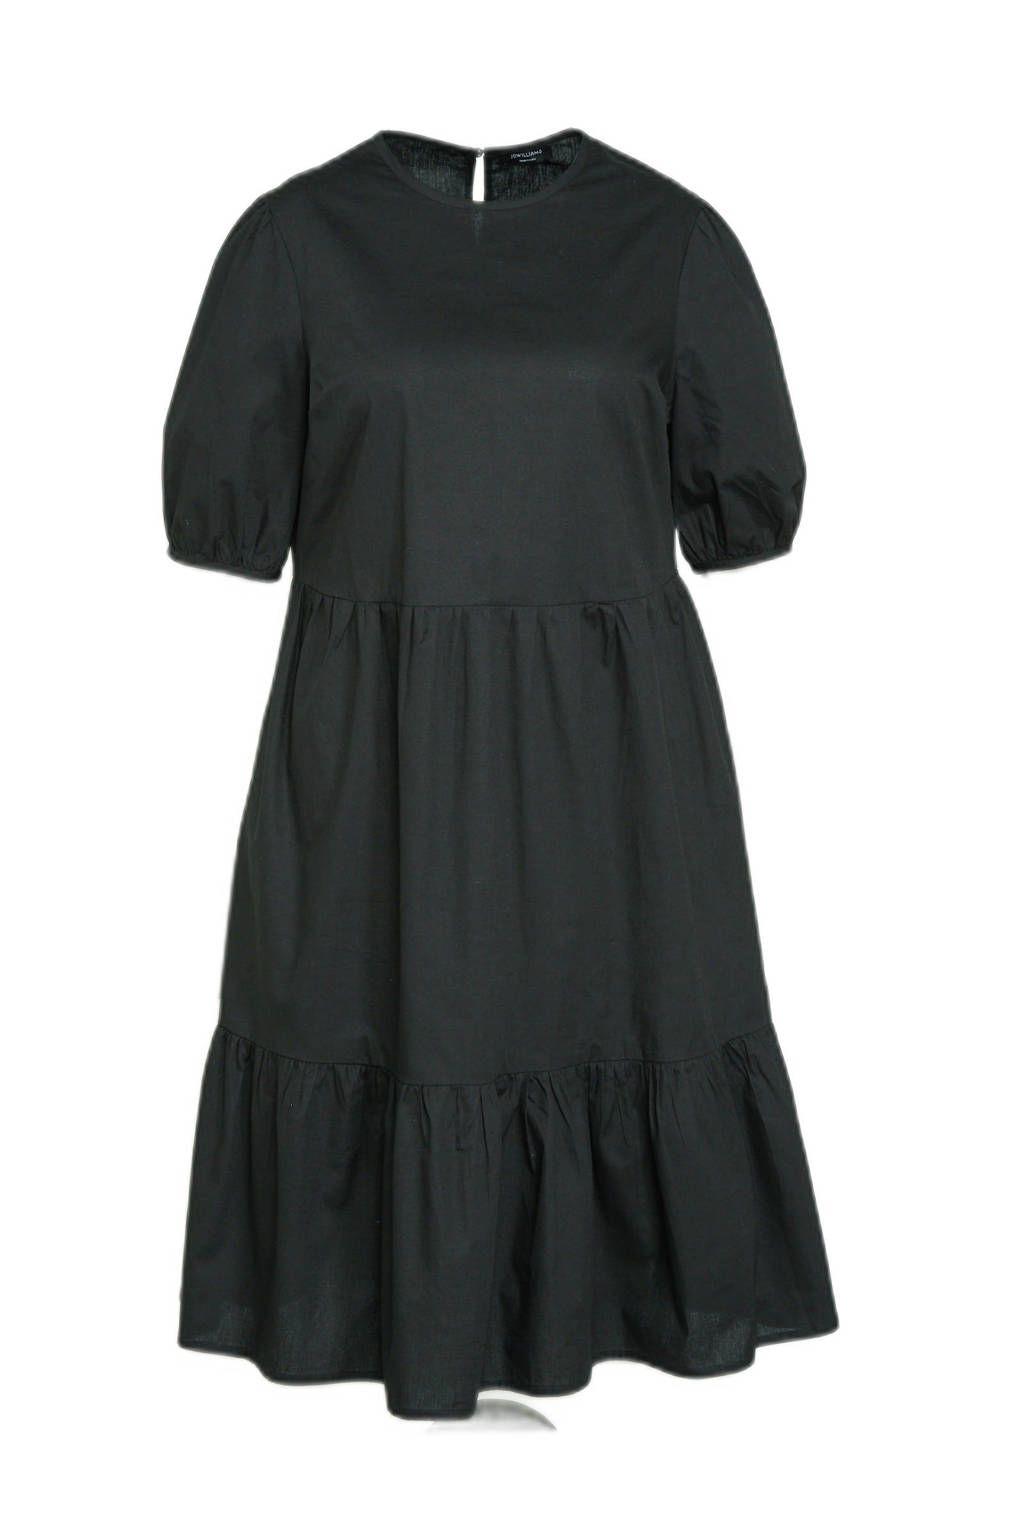 JD Williams A-lijn jurk met volant zwart, Zwart